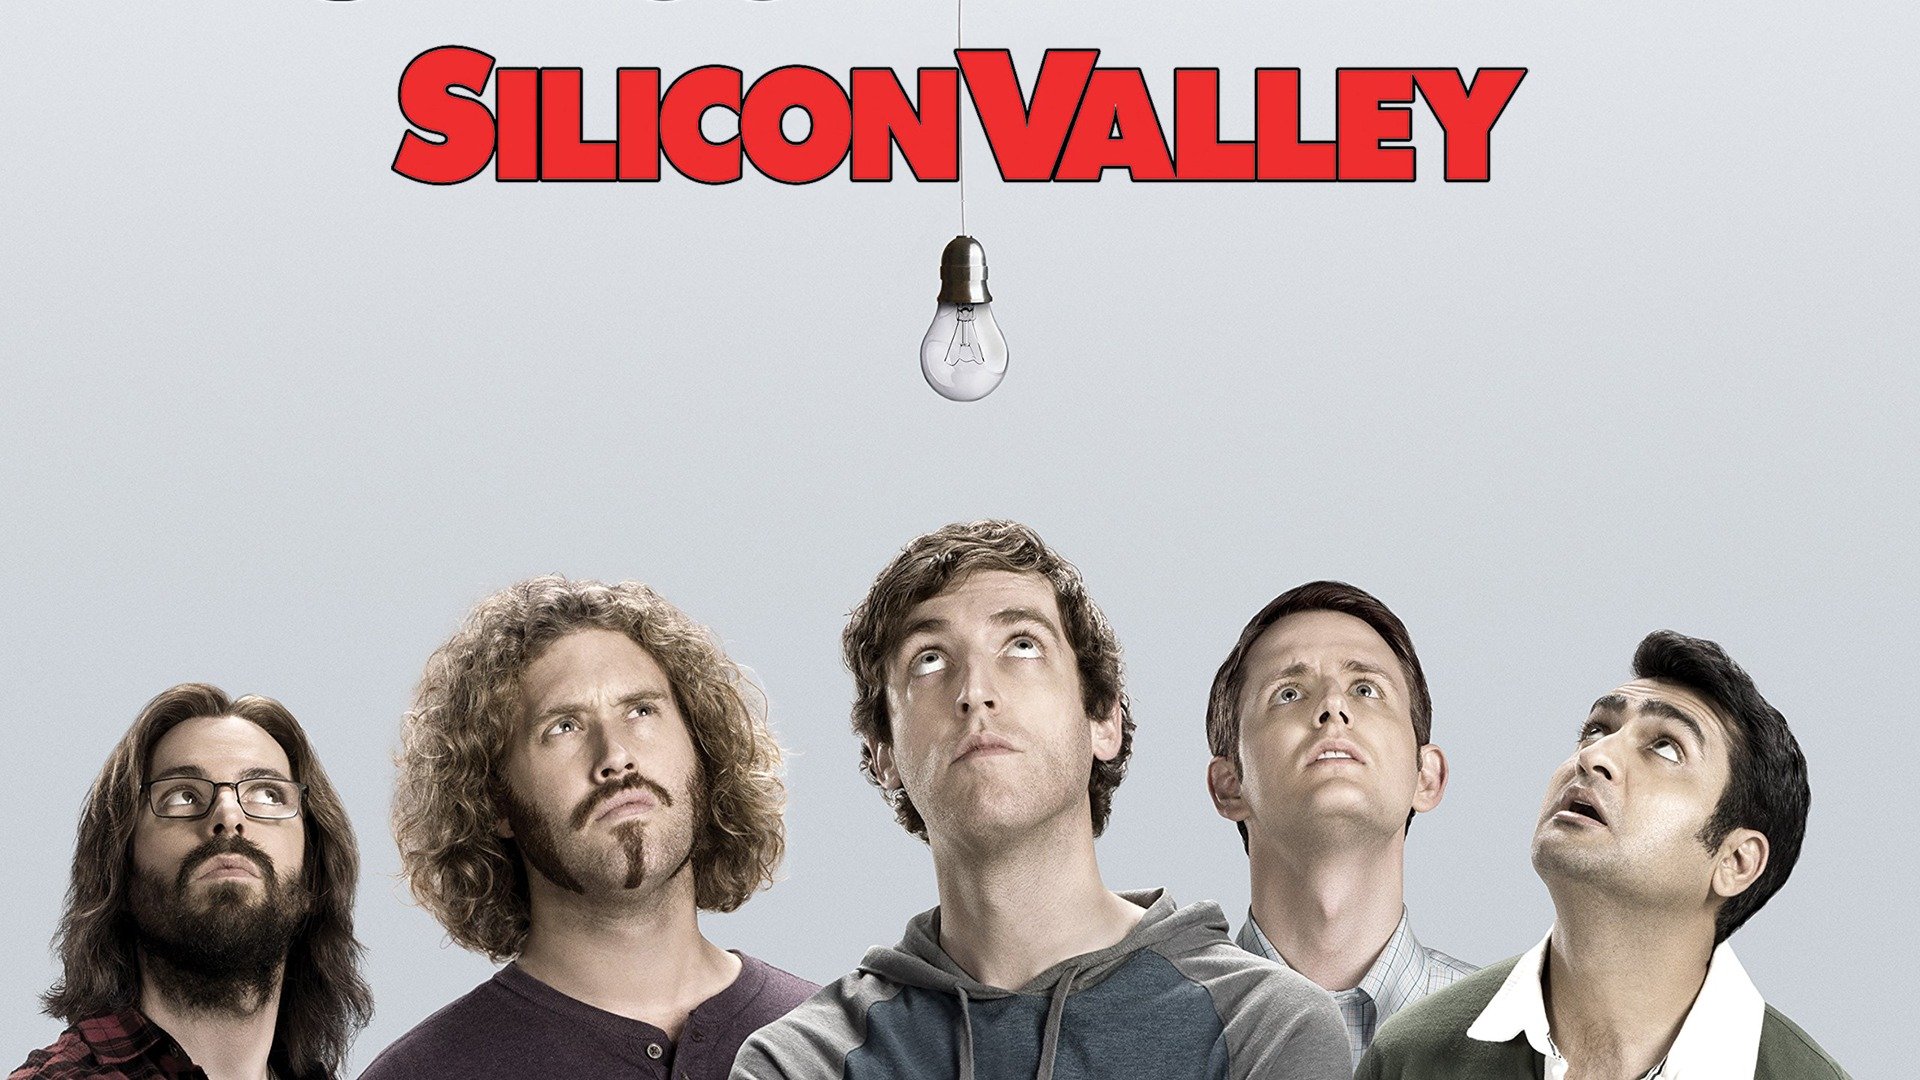 silicon valley season 3 episode 10 watch online free